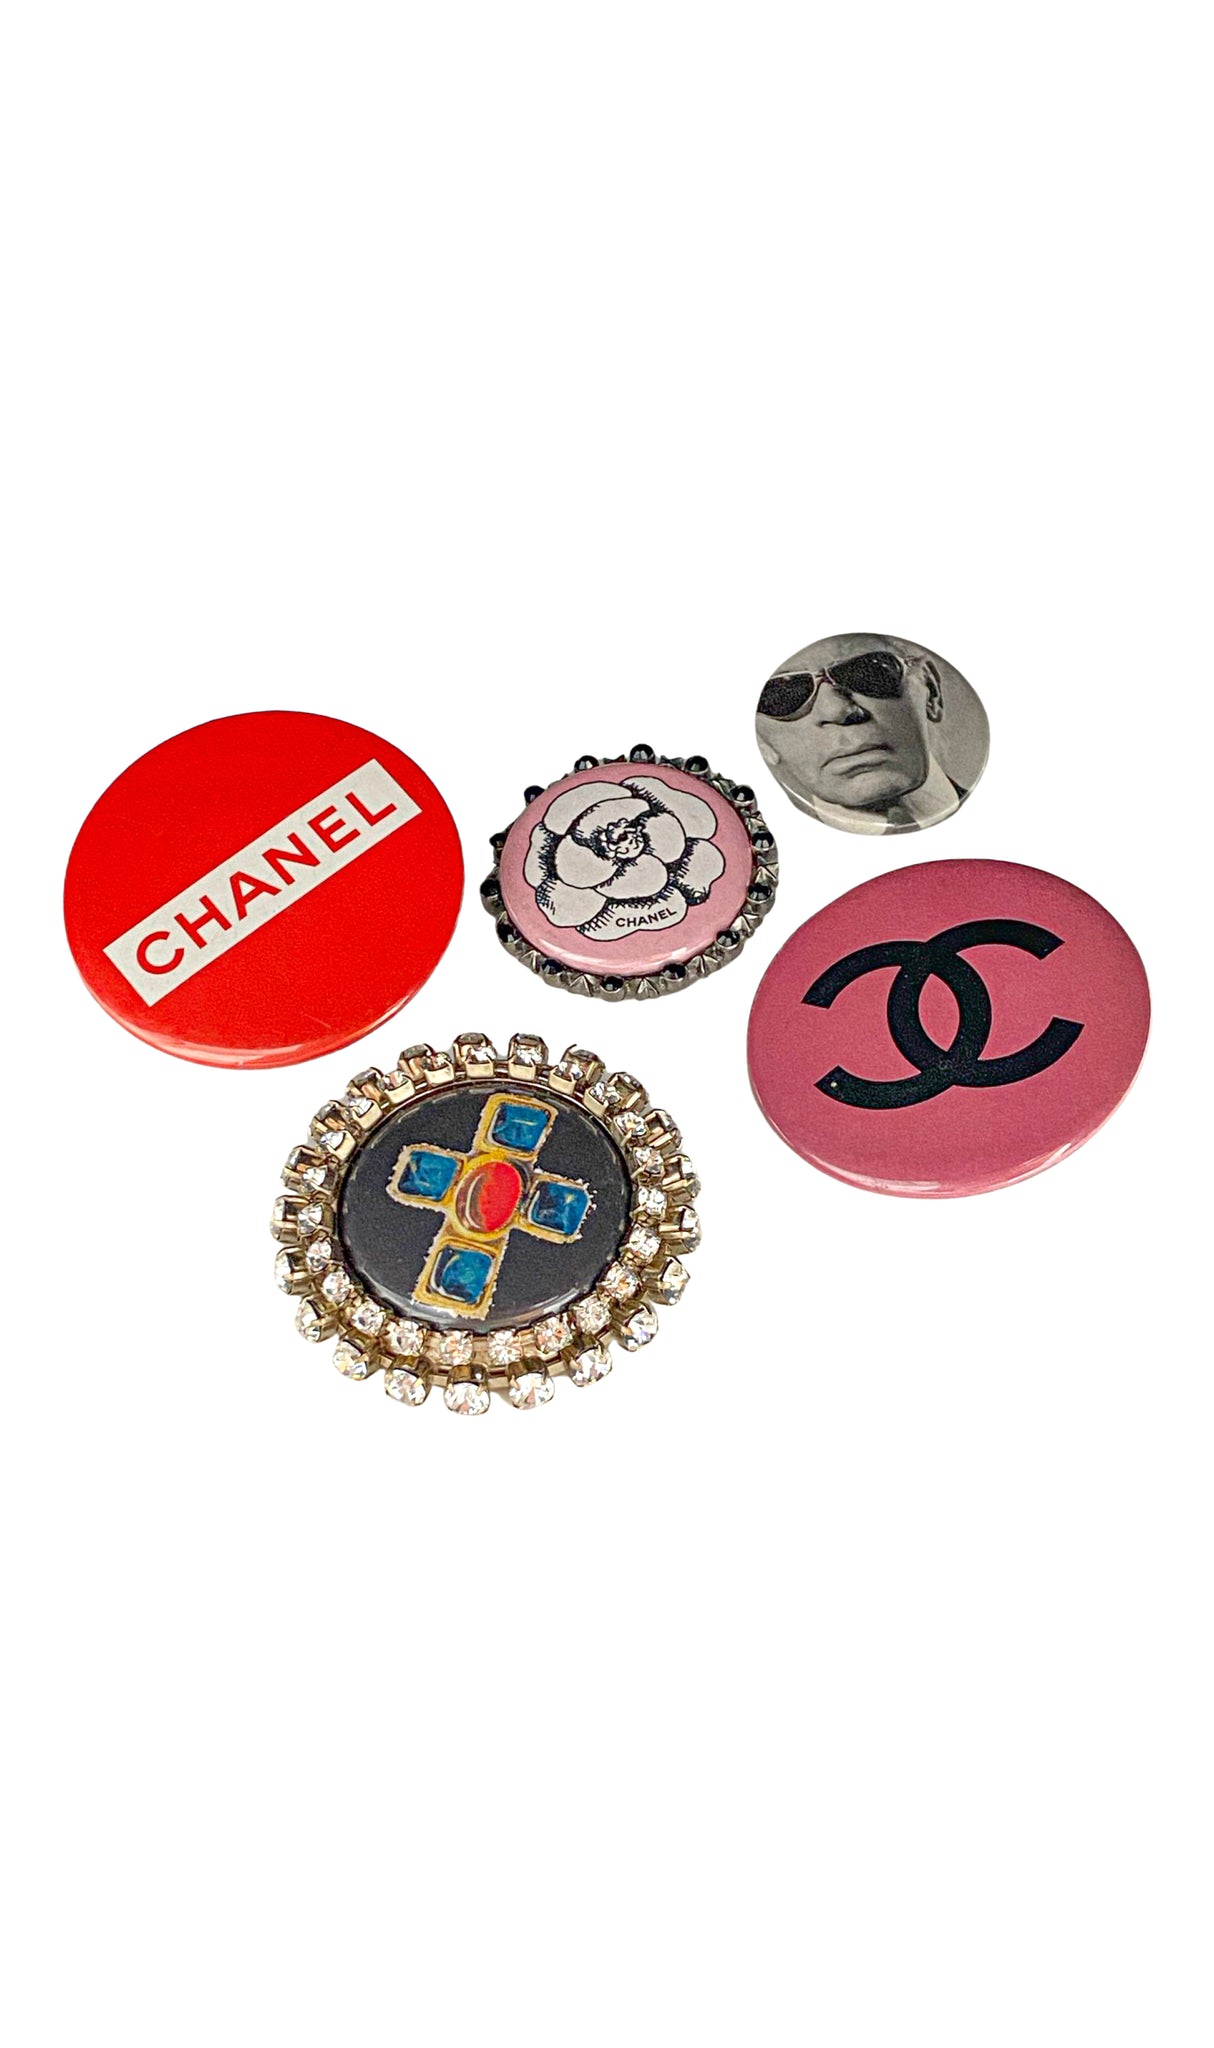 Chanel Broaches / Button Pins Chanel Logo, Camille, Maltese Cross